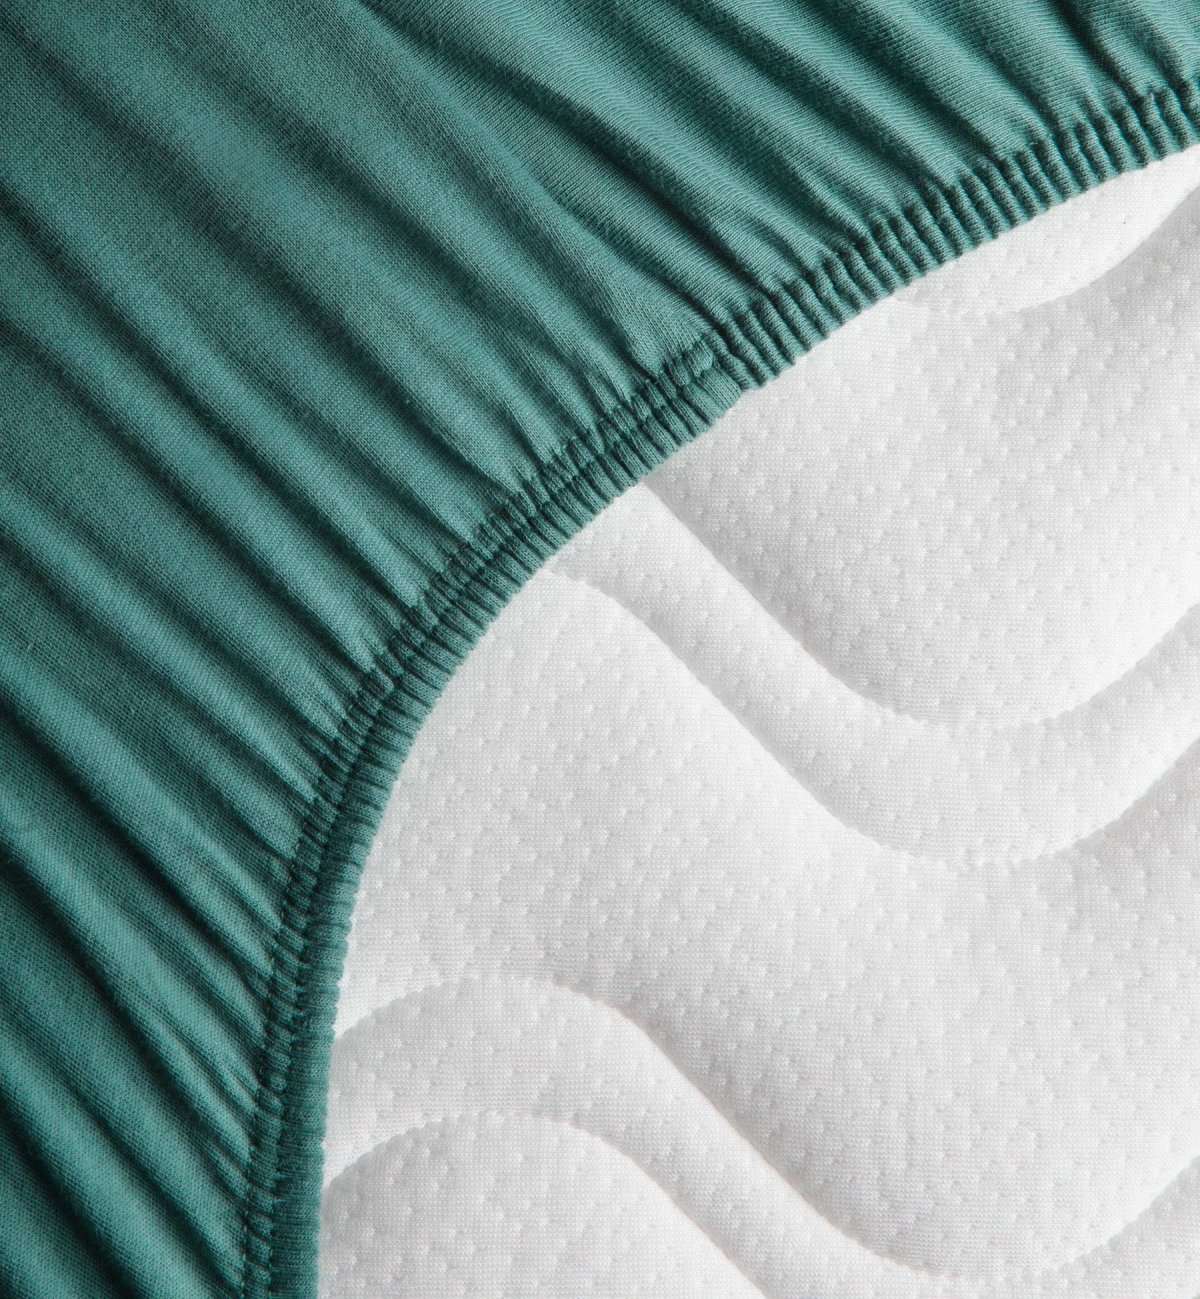 Fitted sheet organic cotton jersey for adult mattress - Kadolis